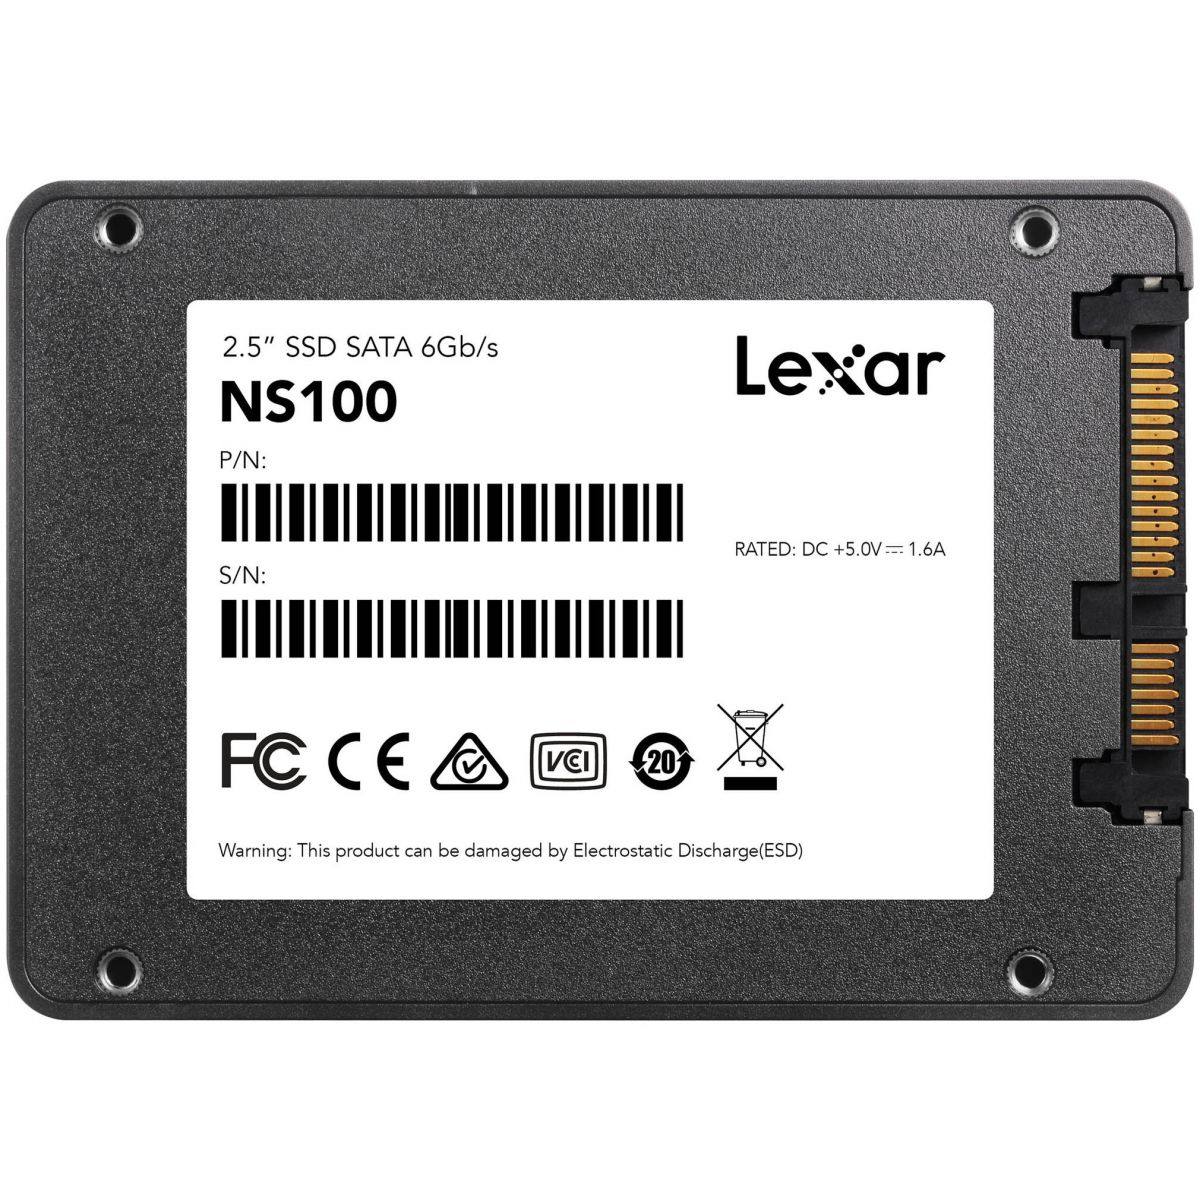 SSD Lexar NS100 240GB 2.5-Inch SATA III